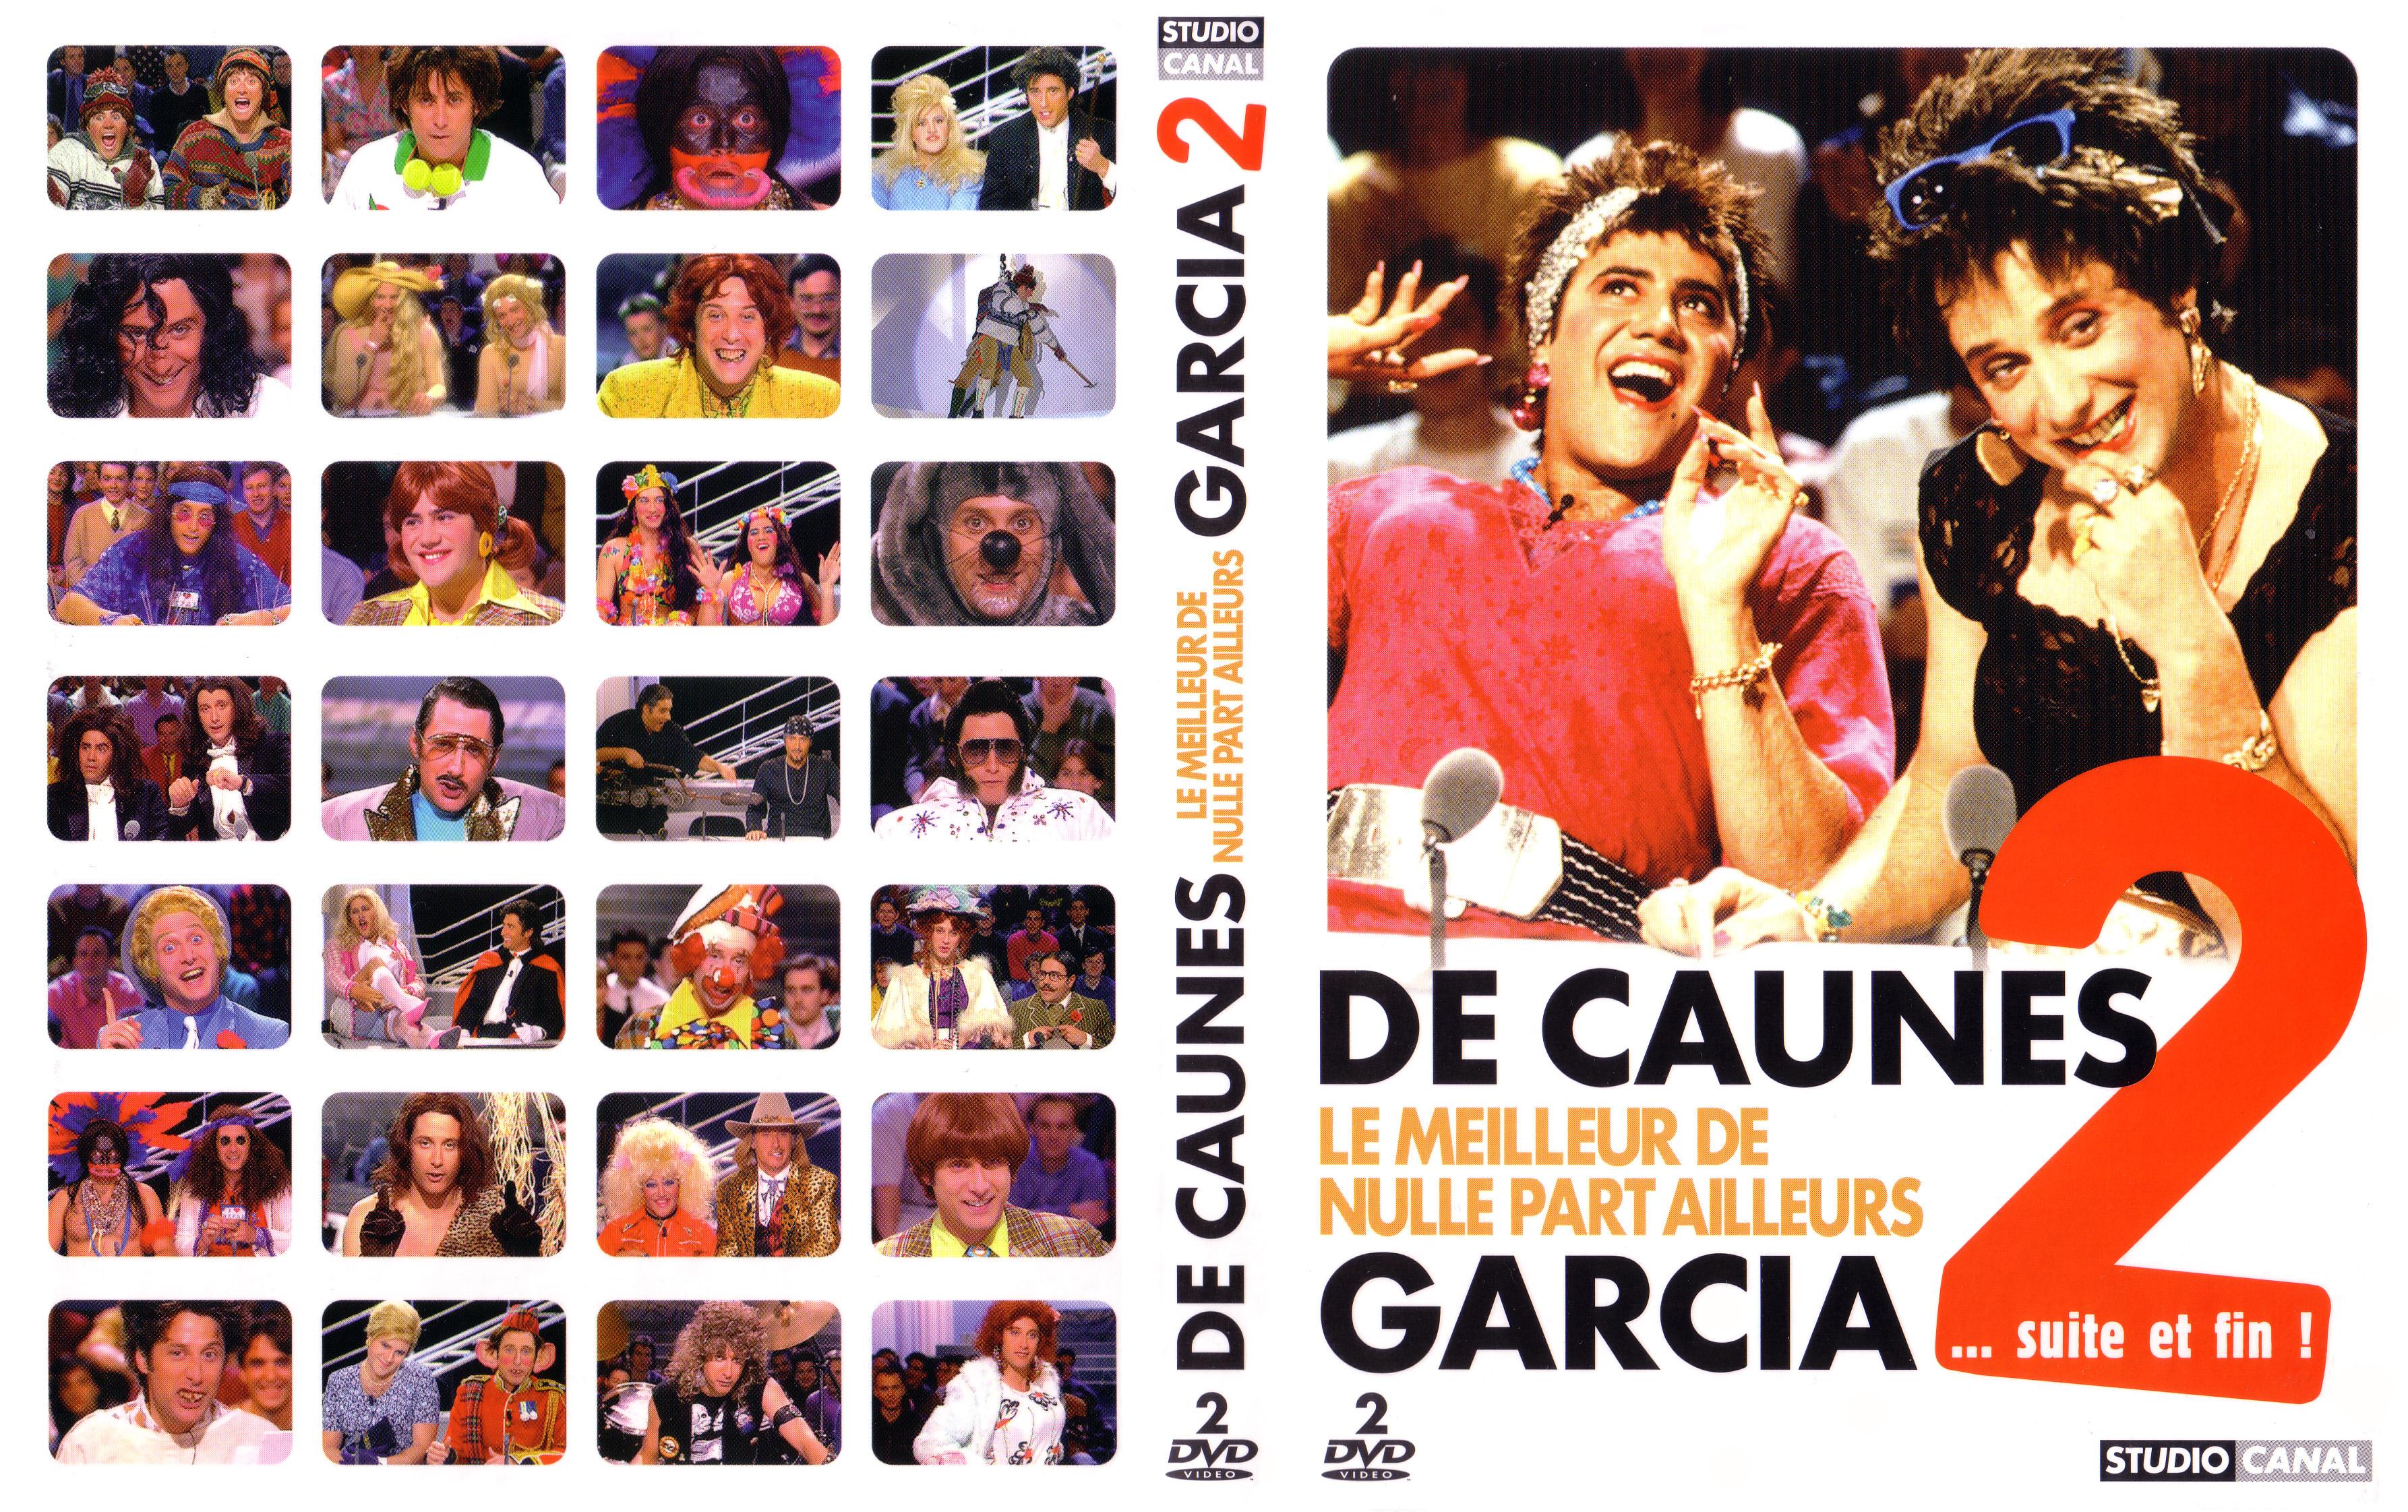 Jaquette DVD De caunes - Garcia 2